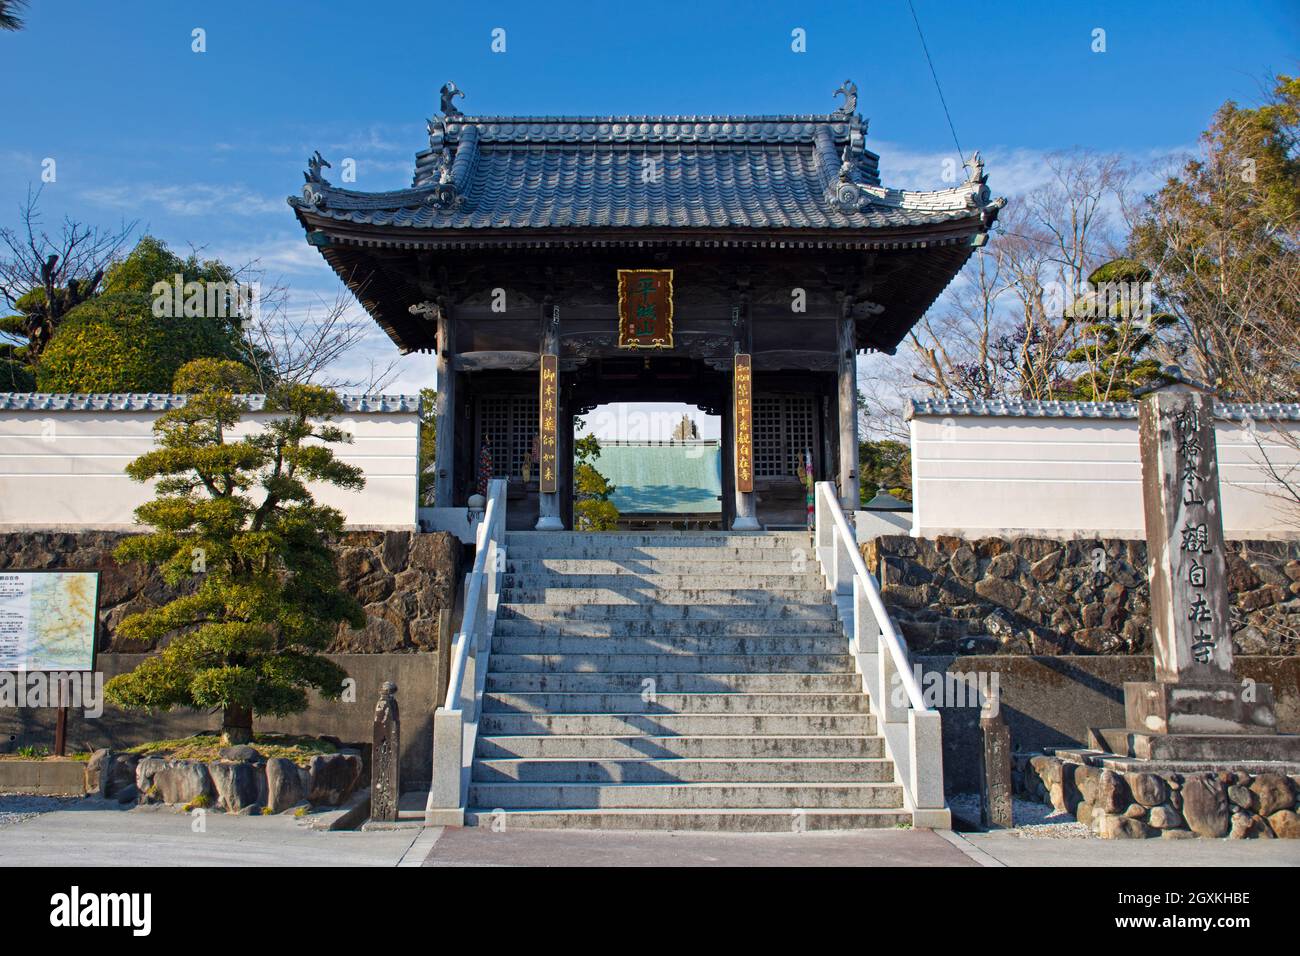 Main Gate or Sanmon of the Kanjizai-ji Shingon Buddhist temple, Ainan, Ehime Prefecture, Japan Stock Photo